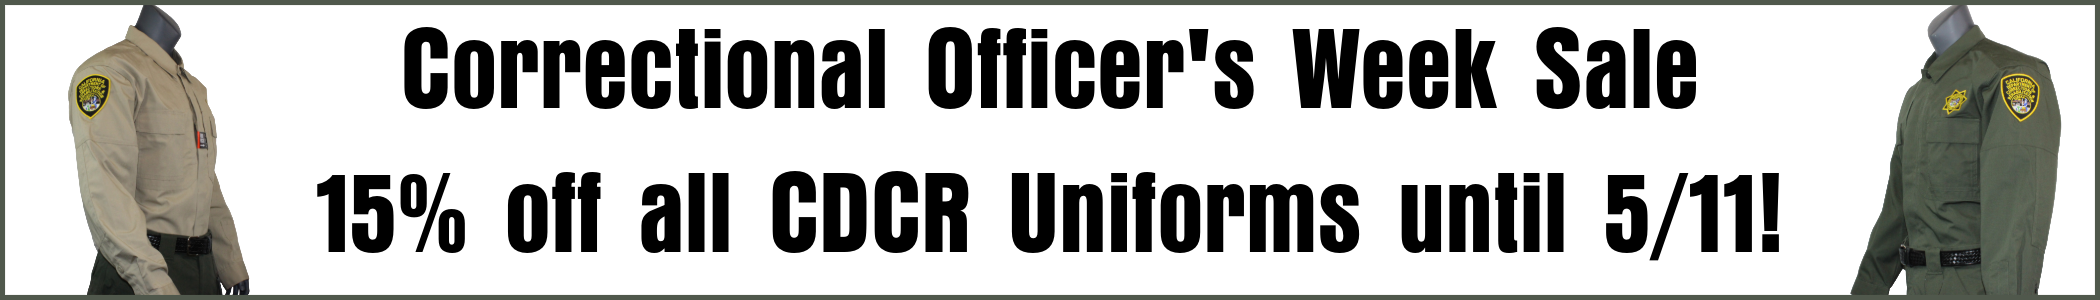 CDCR Uniforms and Equipment